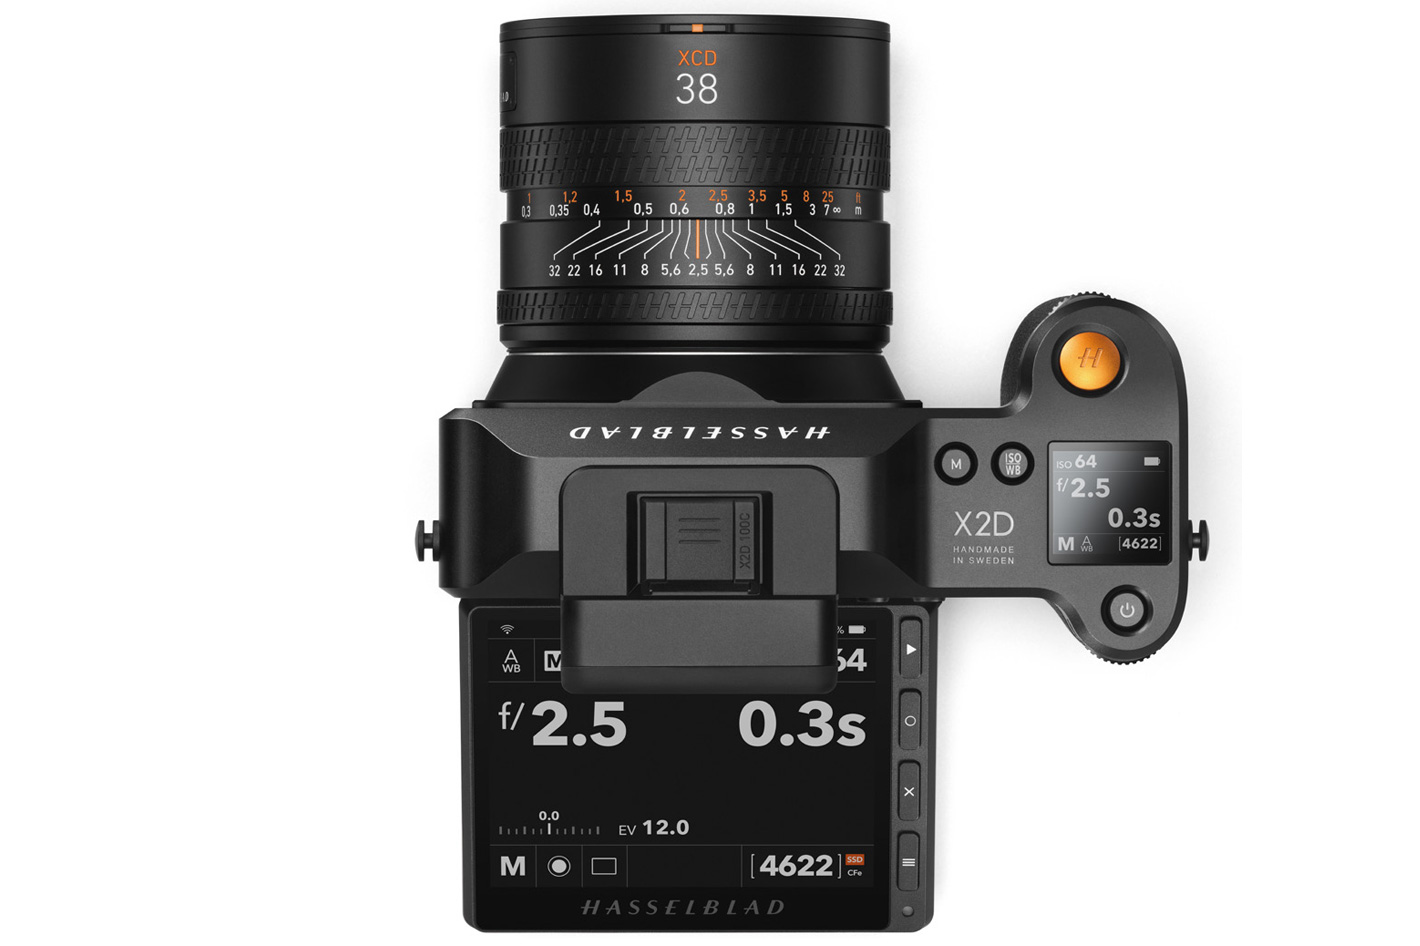 Hasselblad X2D 100C reveals a new flagship camera and three lenses